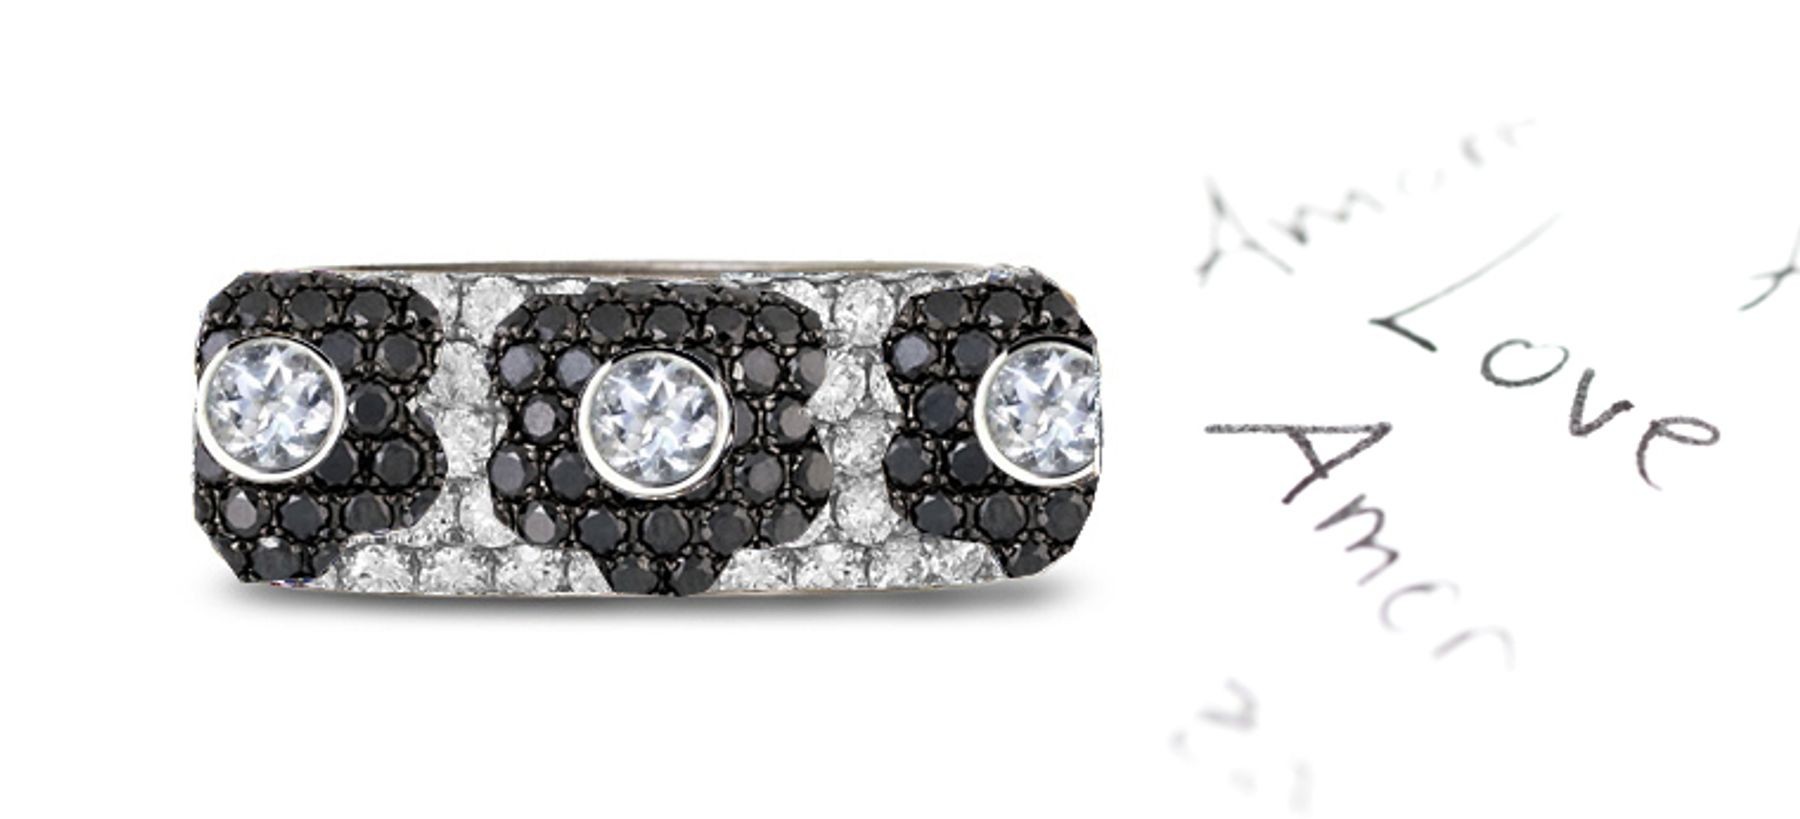 6 mm Wide Micropavé Crusted White Diamonds & Black Diamond Flower Pattern in Platinum